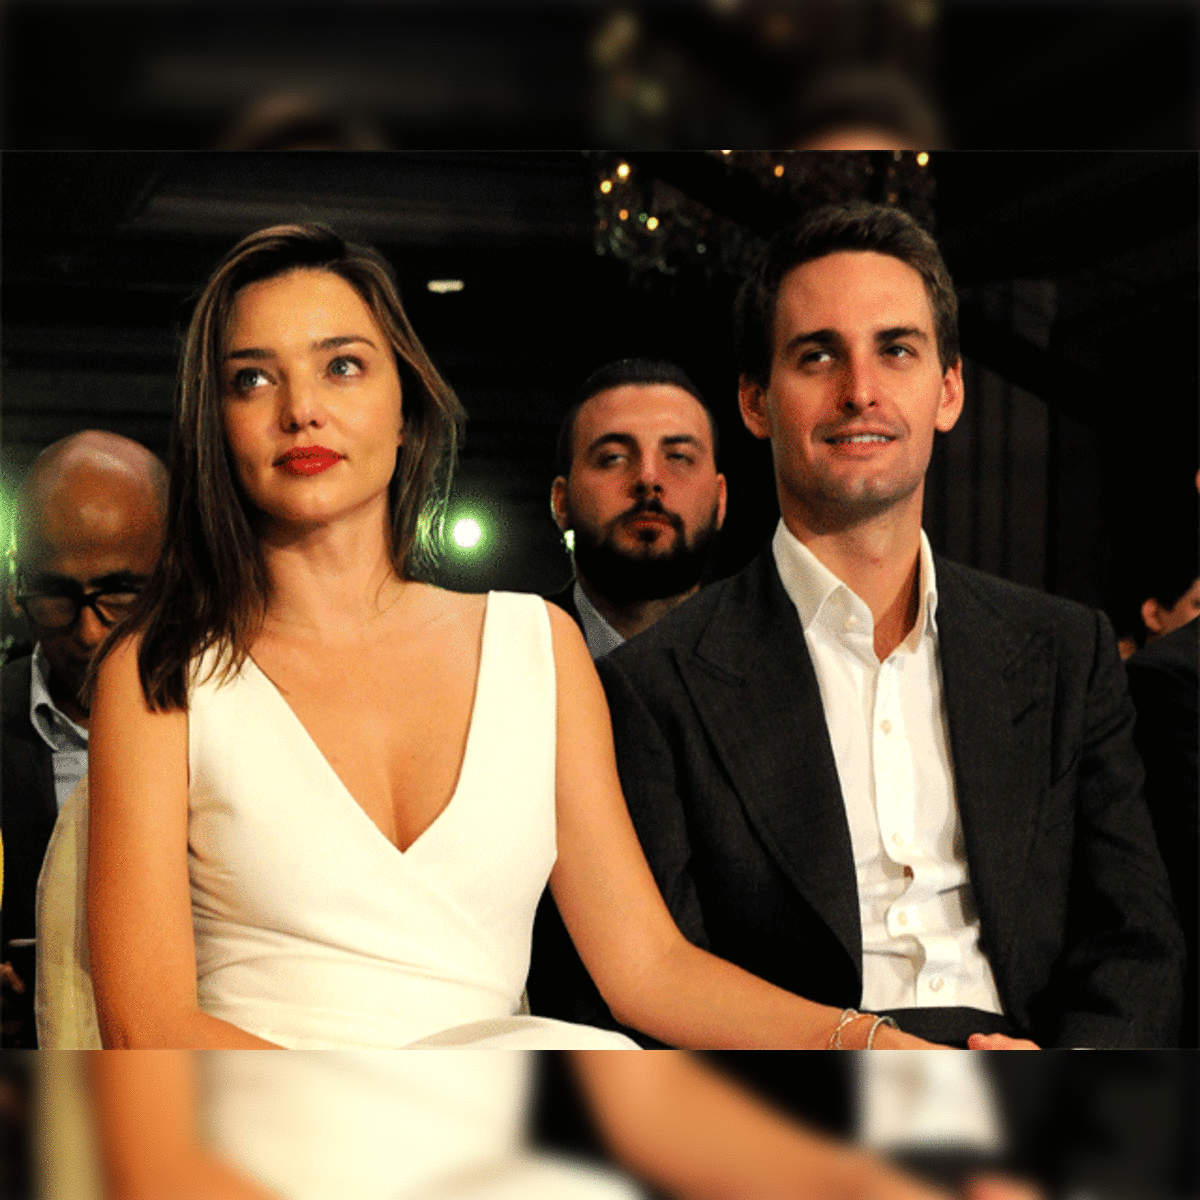 Evan spiegel: Snapchat CEO Evan Spiegel and supermodel Miranda Kerr to have  a backyard wedding - The Economic Times